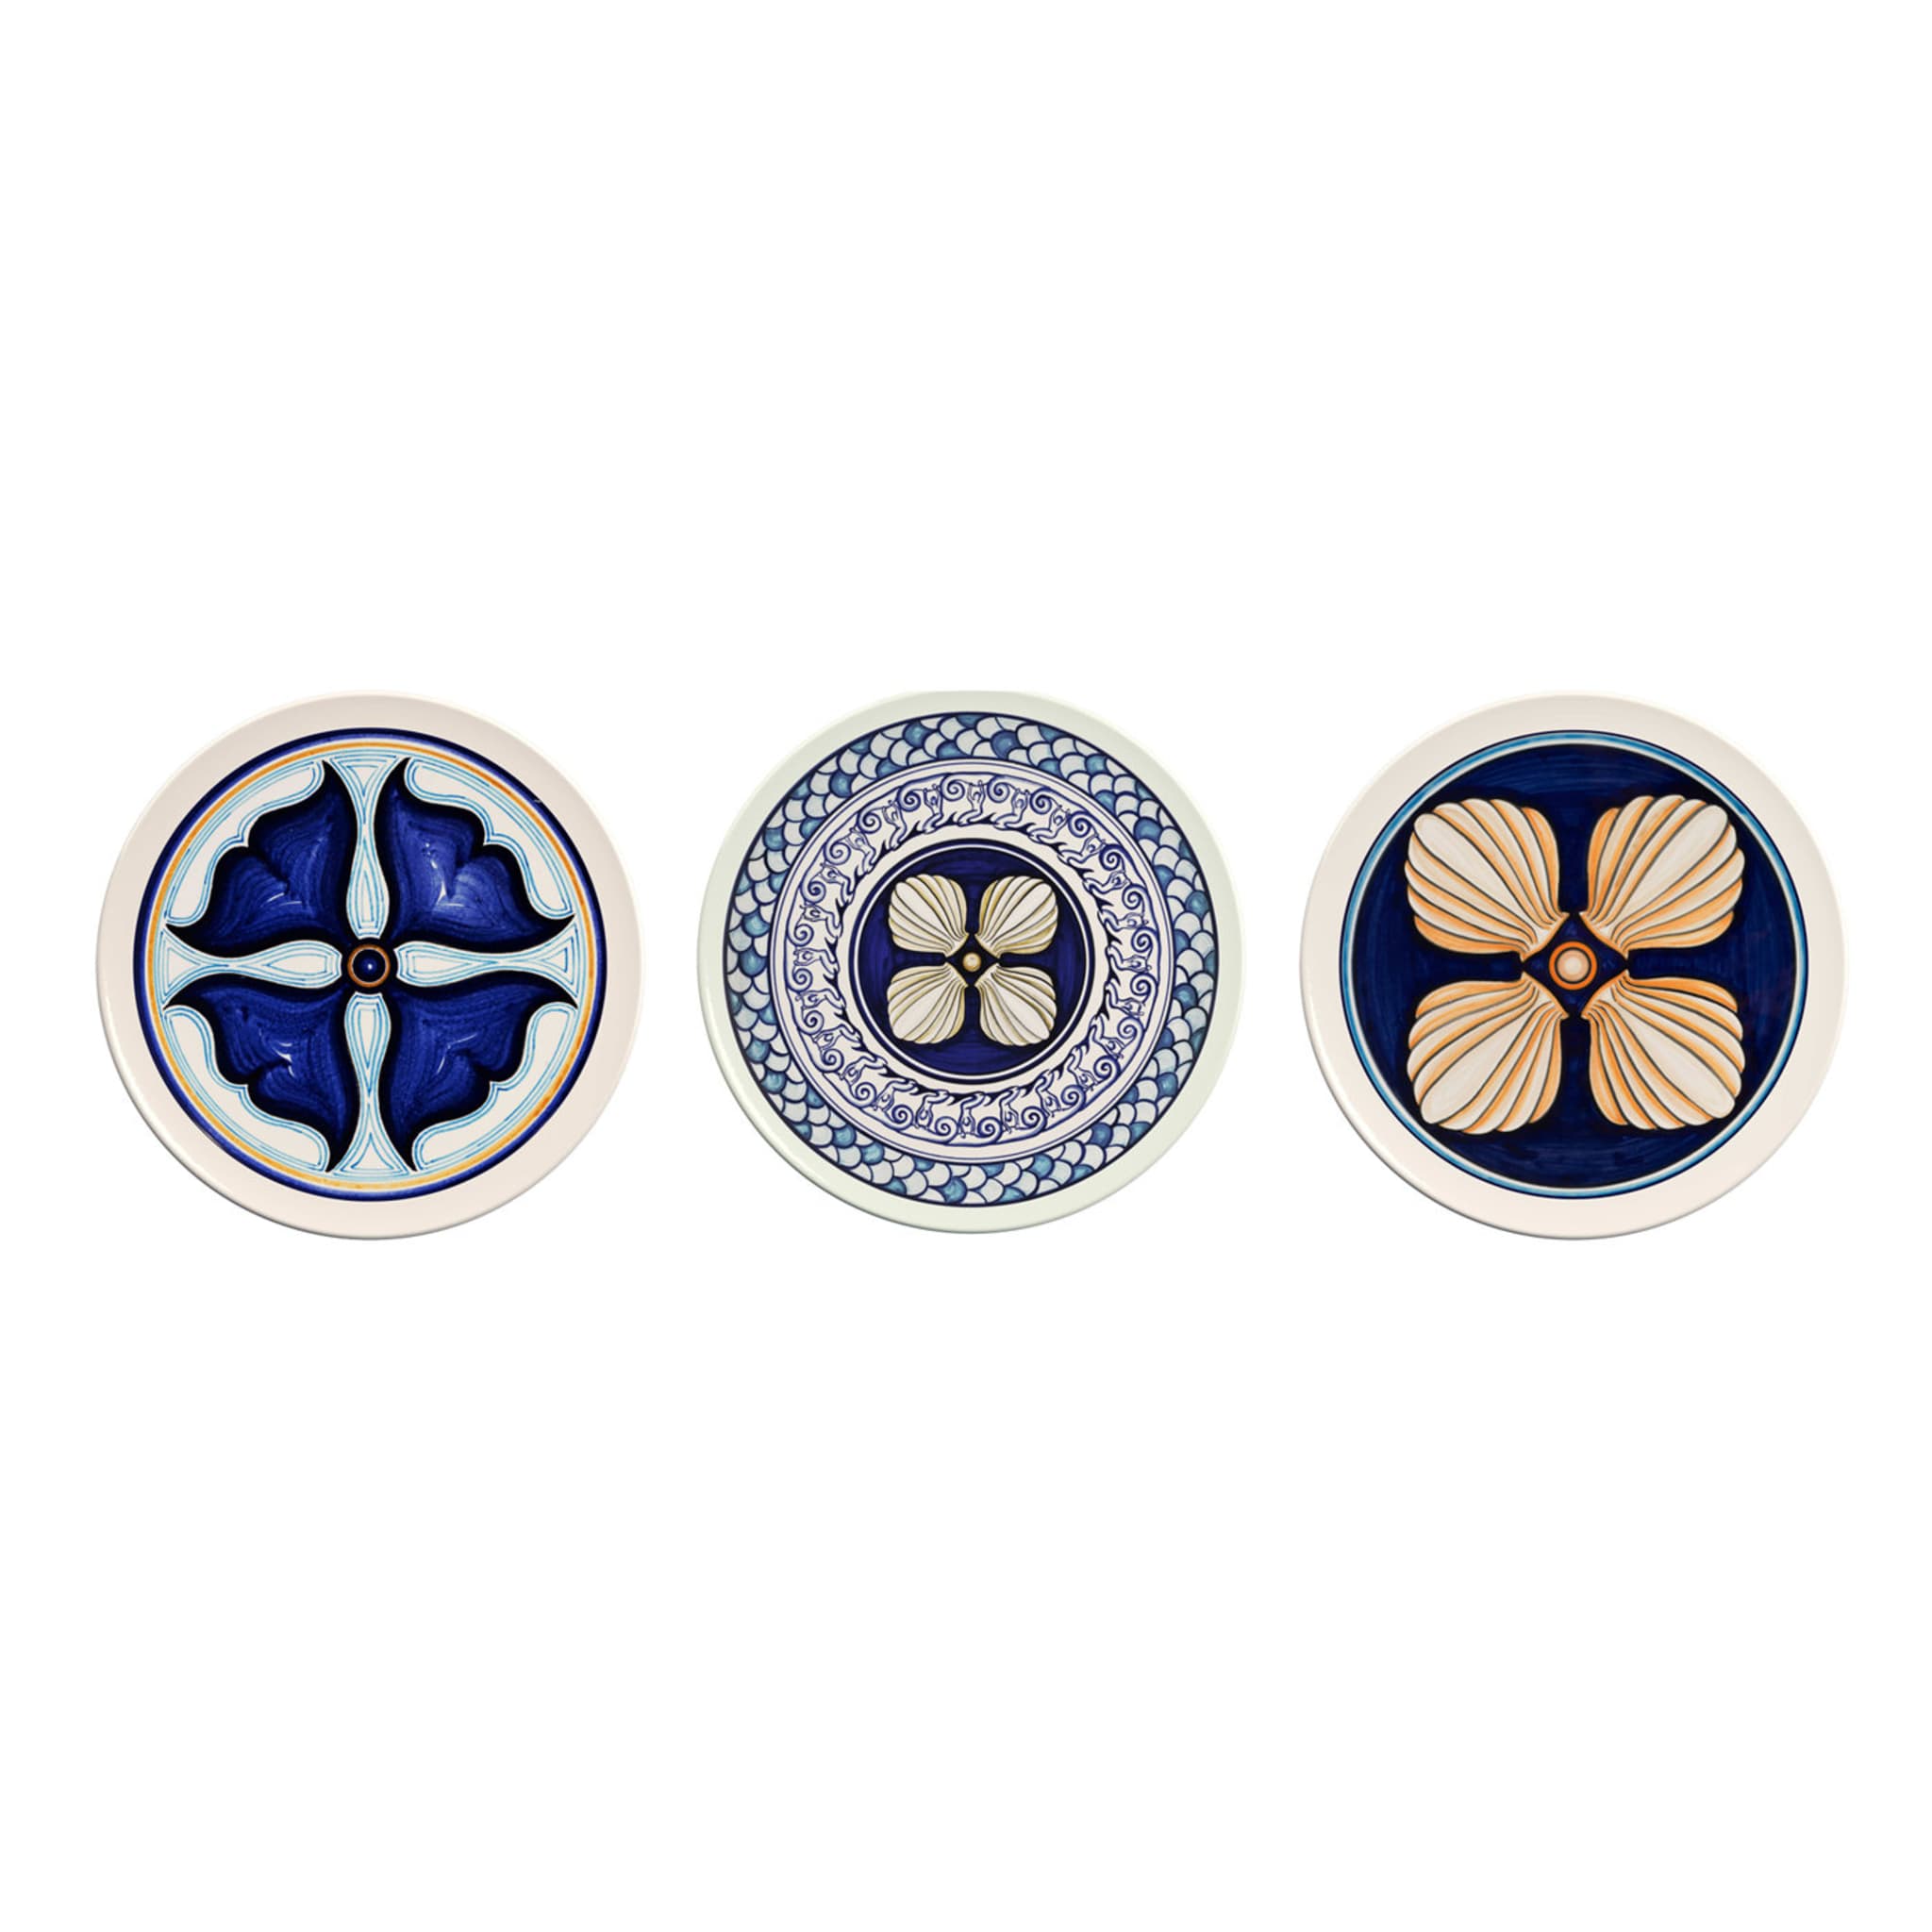 Colapesce Set of 3 Decorative Plates #4 - Main view